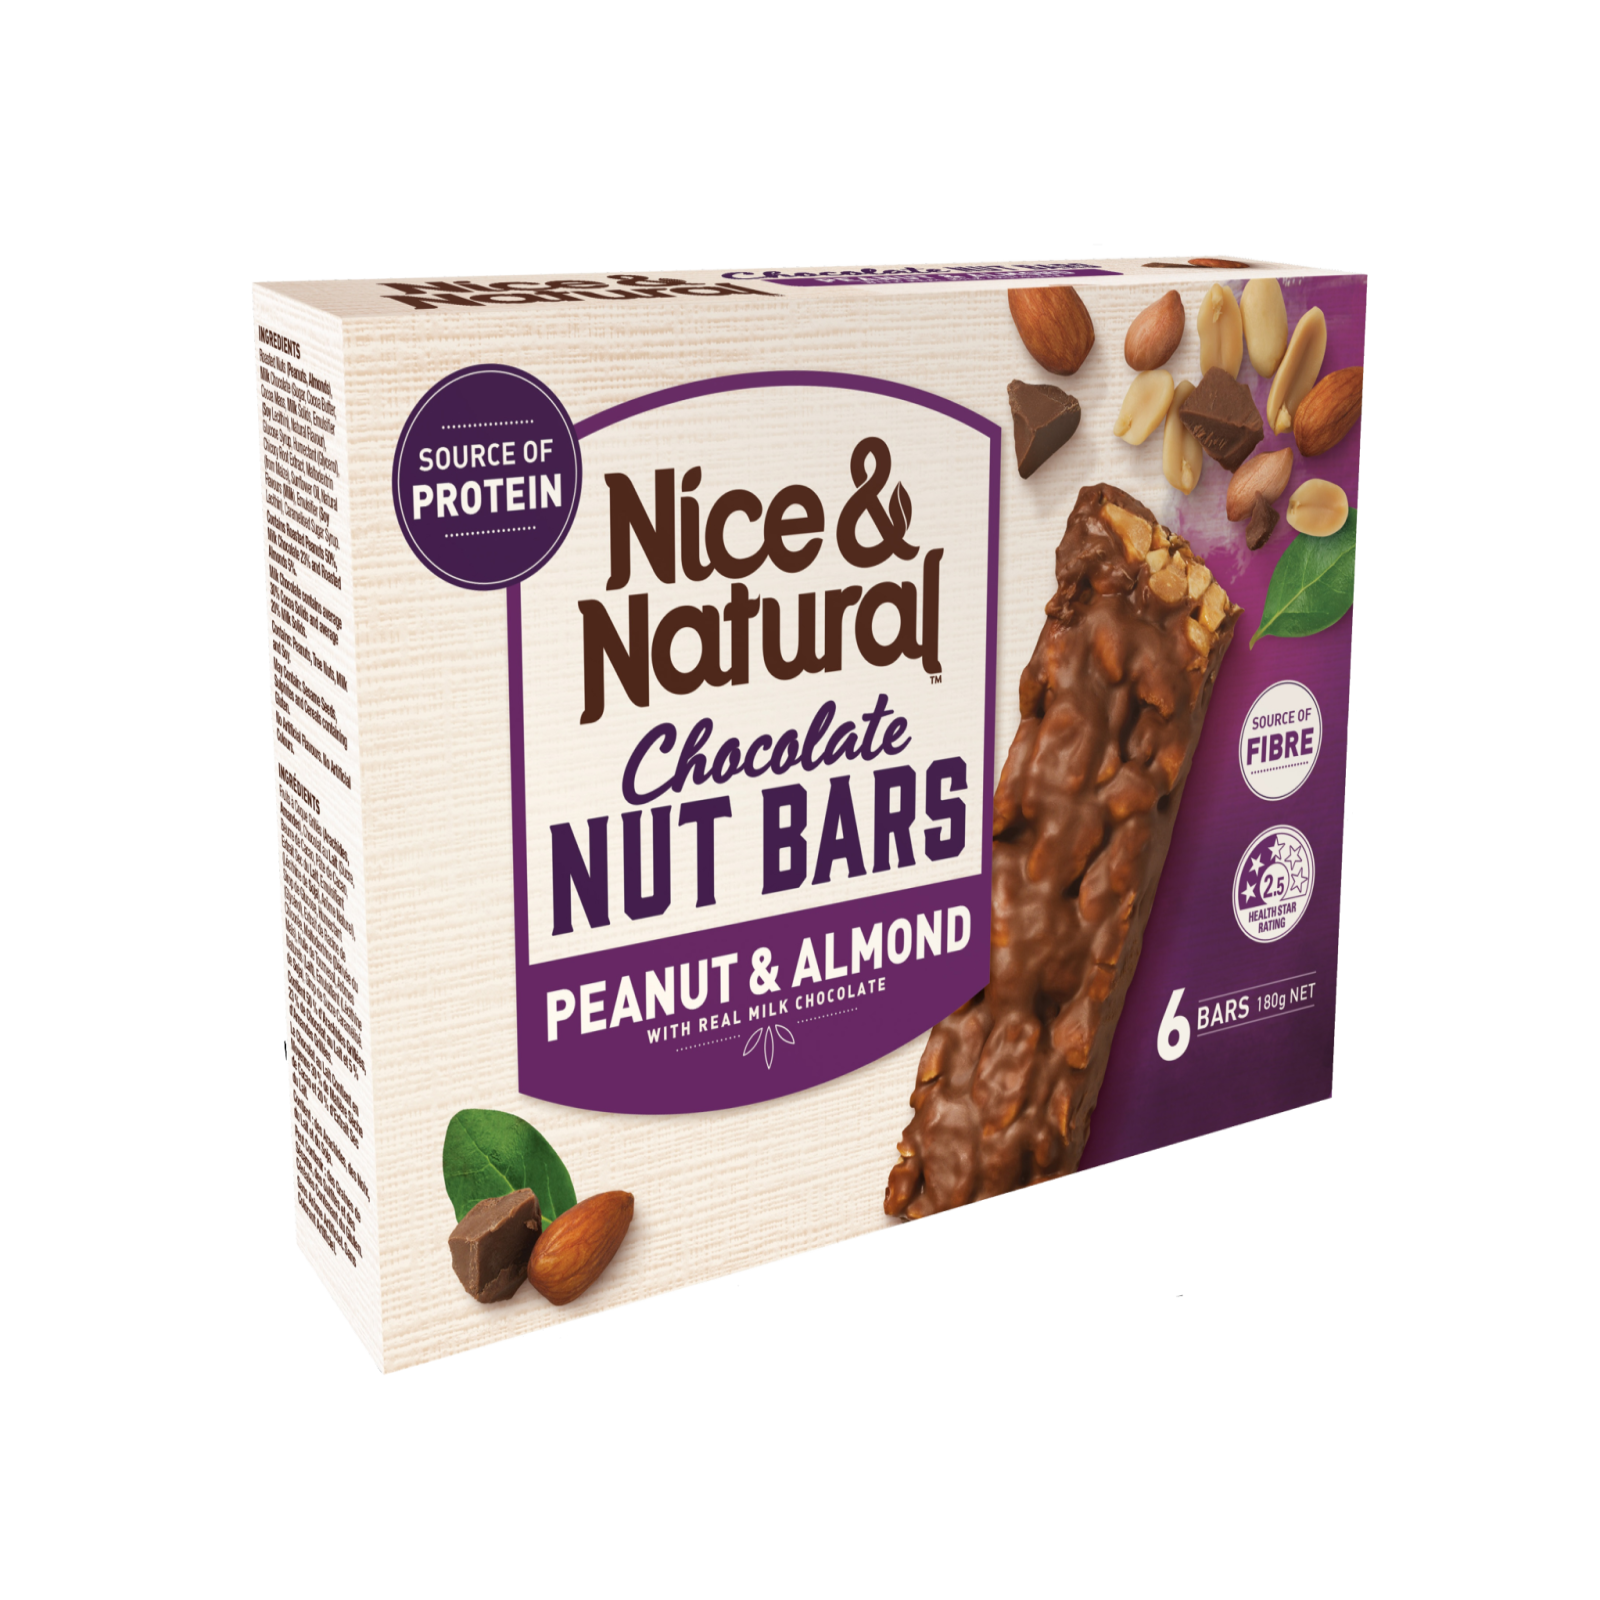 Peanut & Almond Chocolate Nut Bar product image